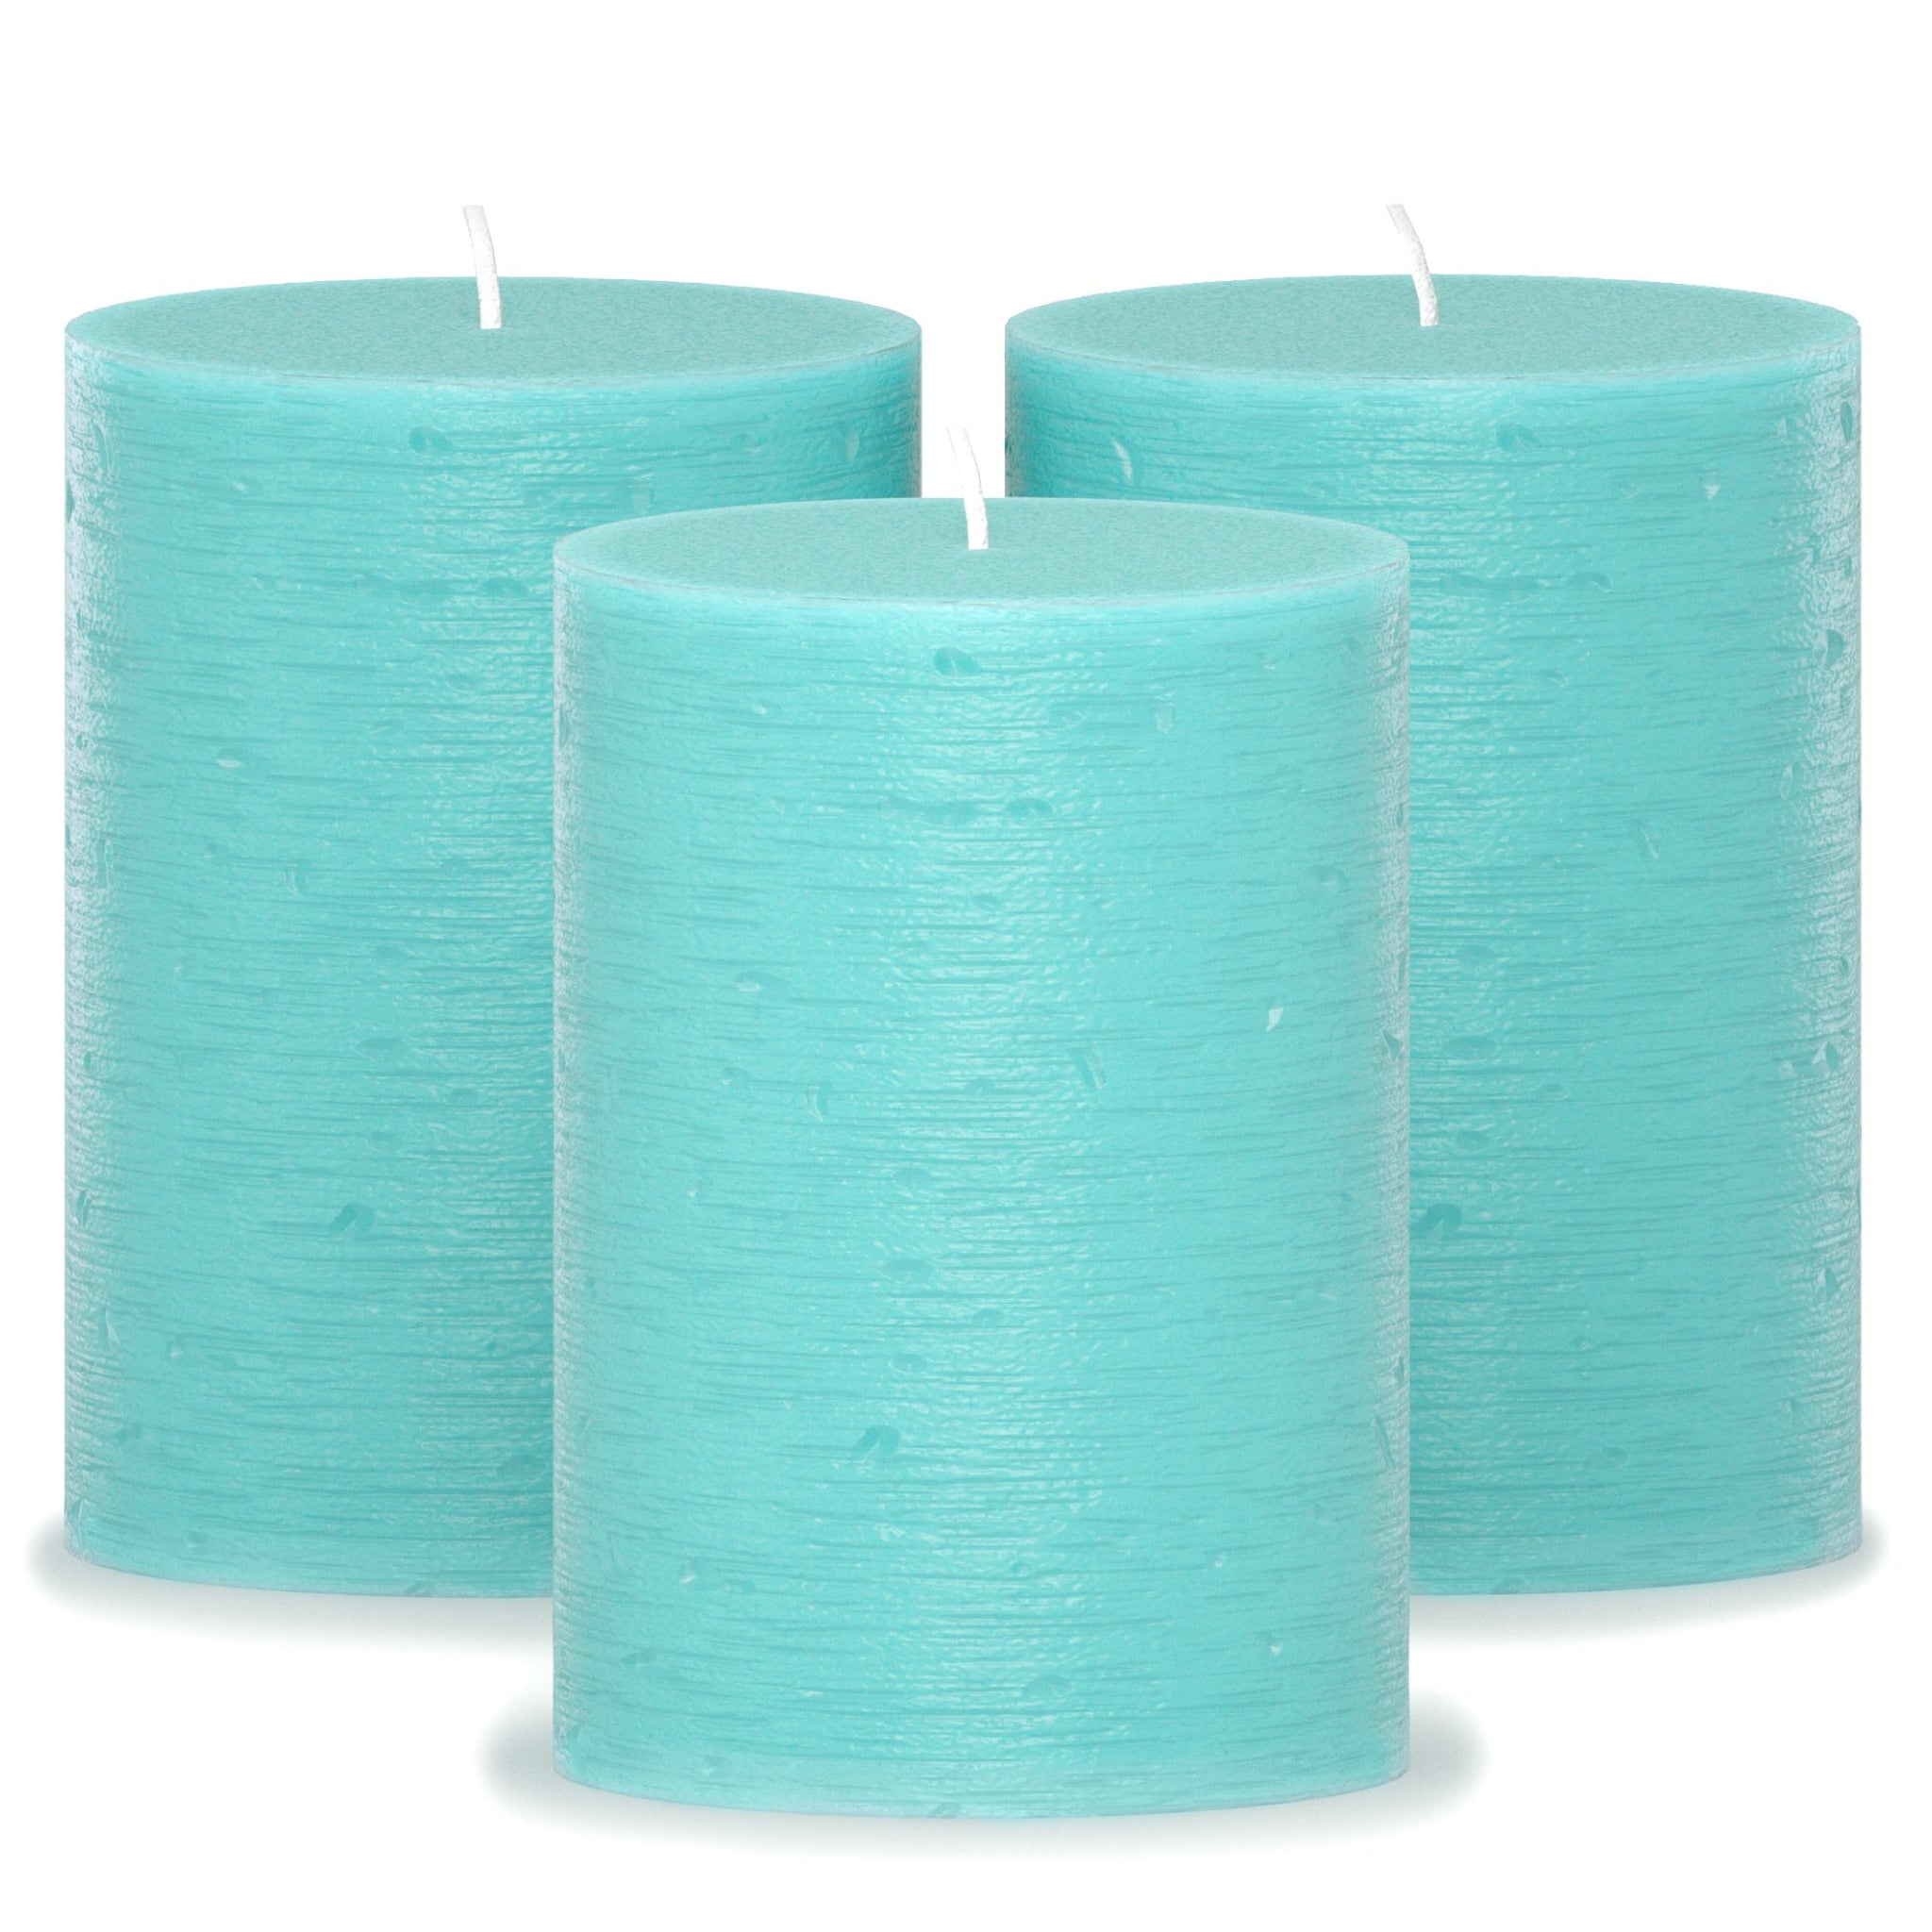 CANDWAX Tuquoise Pillar Candles 3" - Set of 3pcs